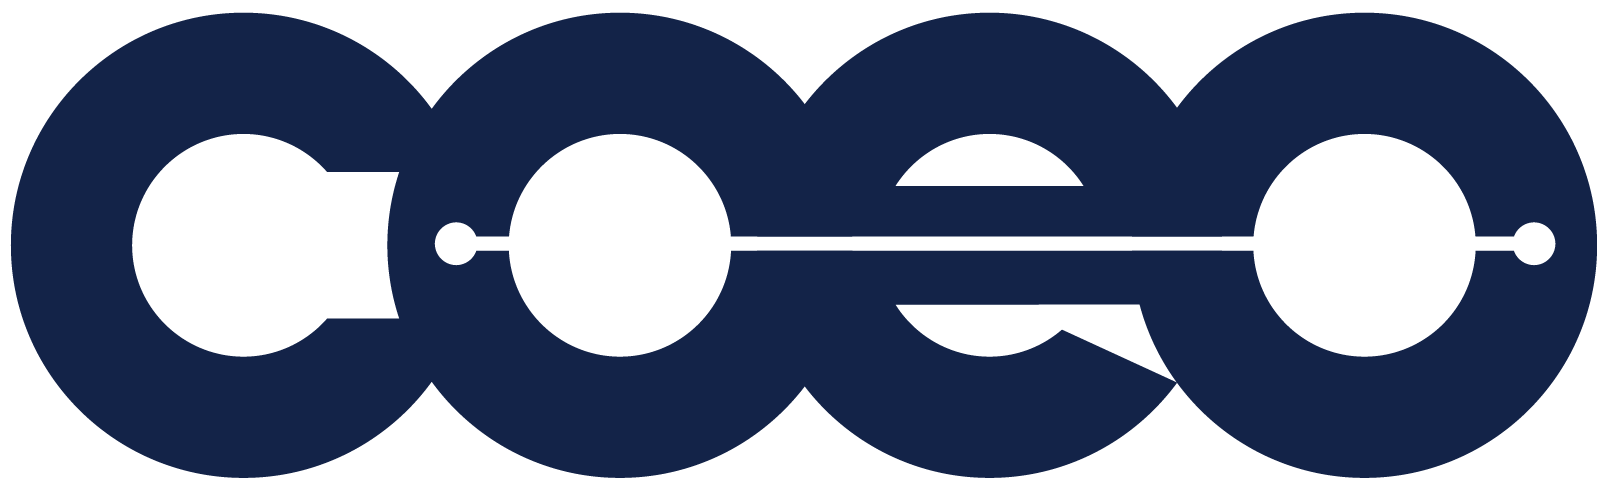 Coeo_Logo-1-1.png